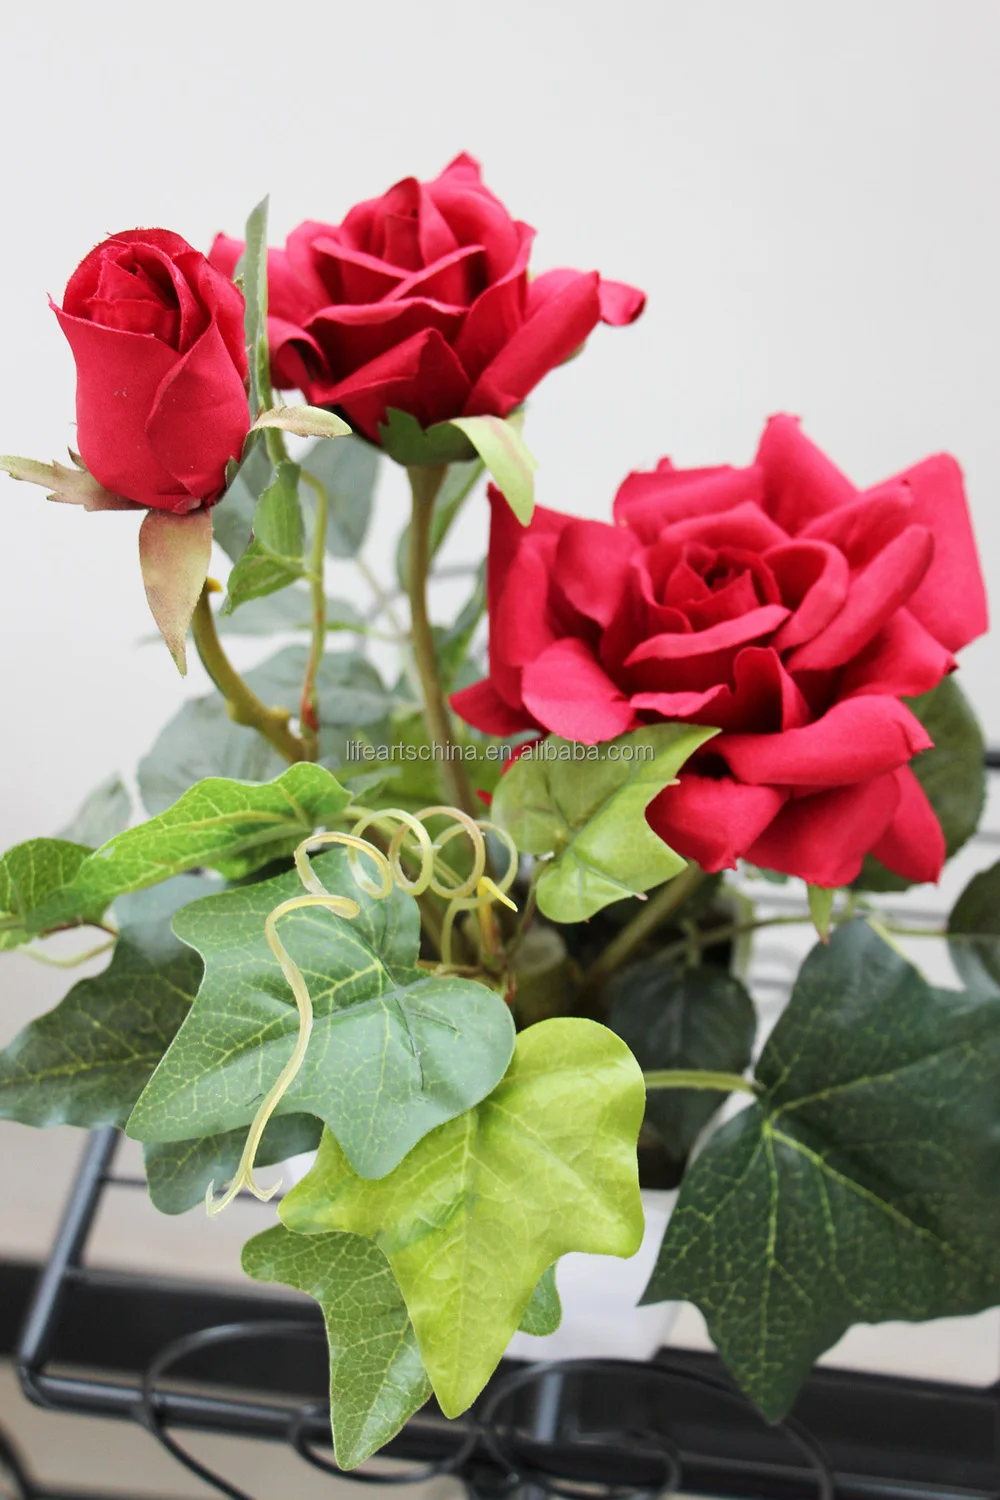 Tanaman Bunga 32 Cm Mawar Buatan Bunga Bonsai Bunga Merah Buy Tanaman Bunga Mawar Buatan Bunga Bonsai Product On Alibaba Com